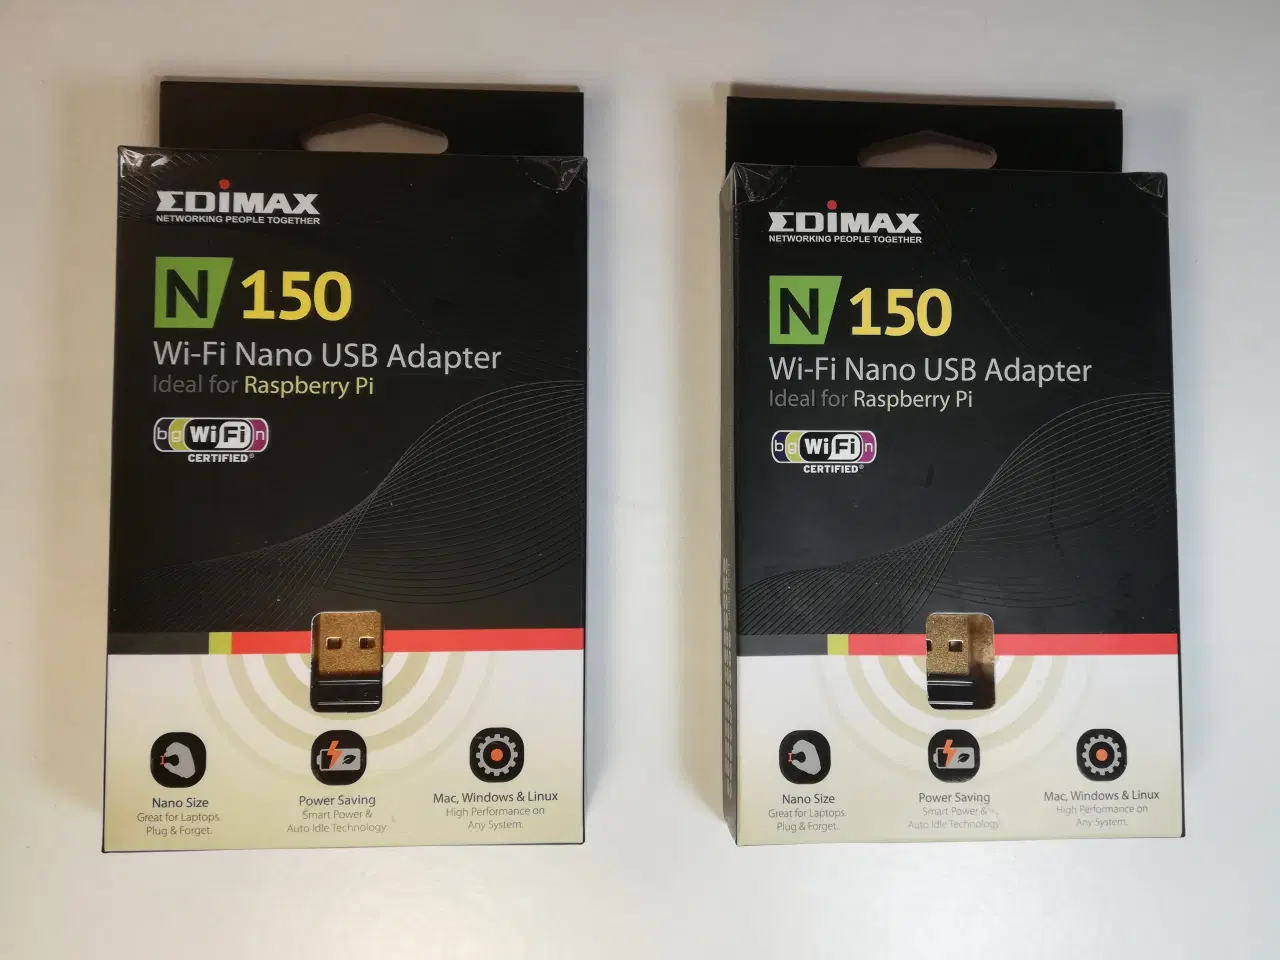 Billede 1 - Edimax N150 Wi-Fi Nano USB Adapter, 2 stk.